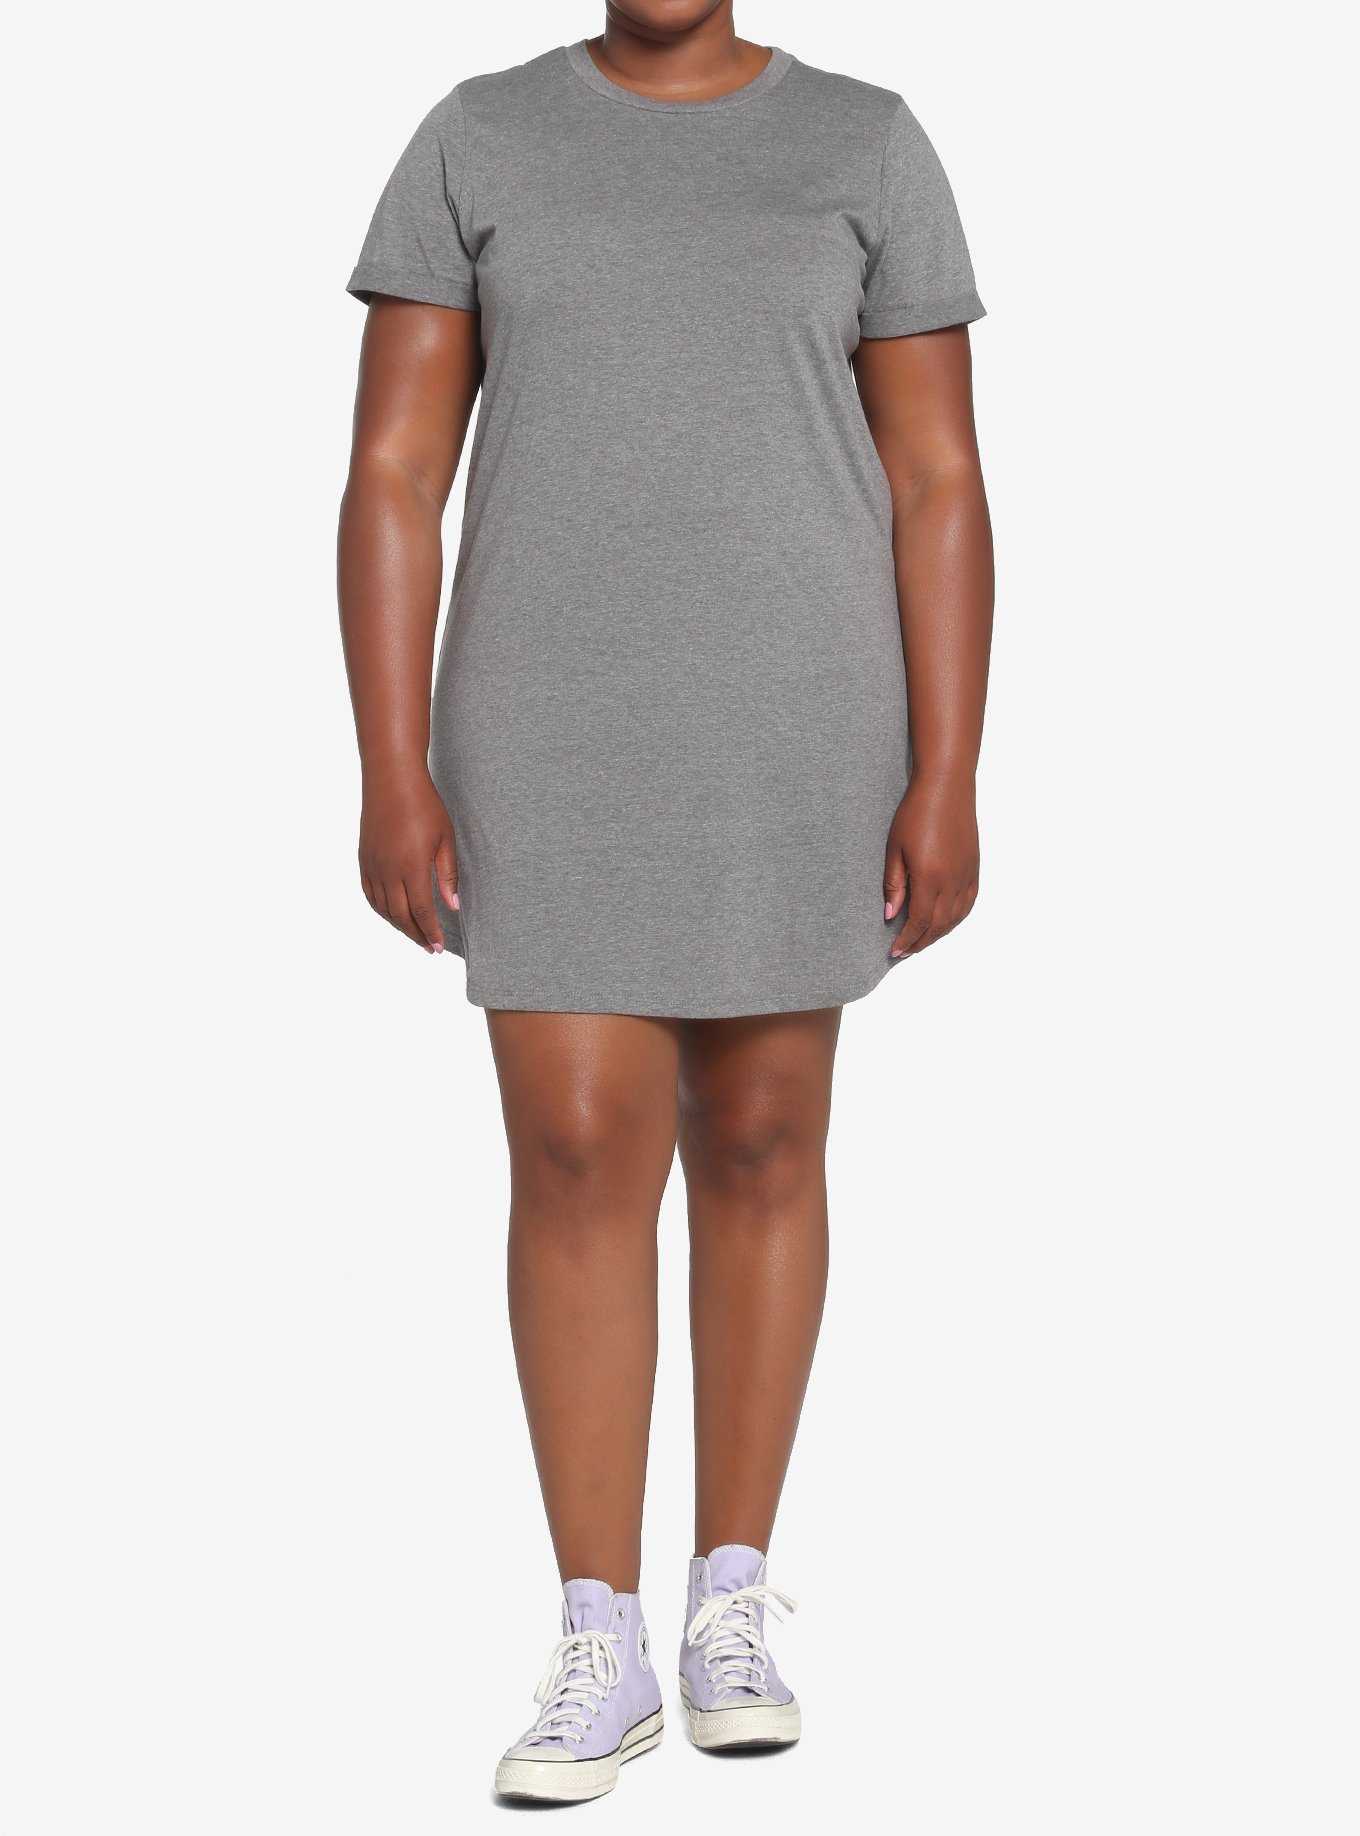 Heather Grey T-Shirt Dress Plus Size, , hi-res